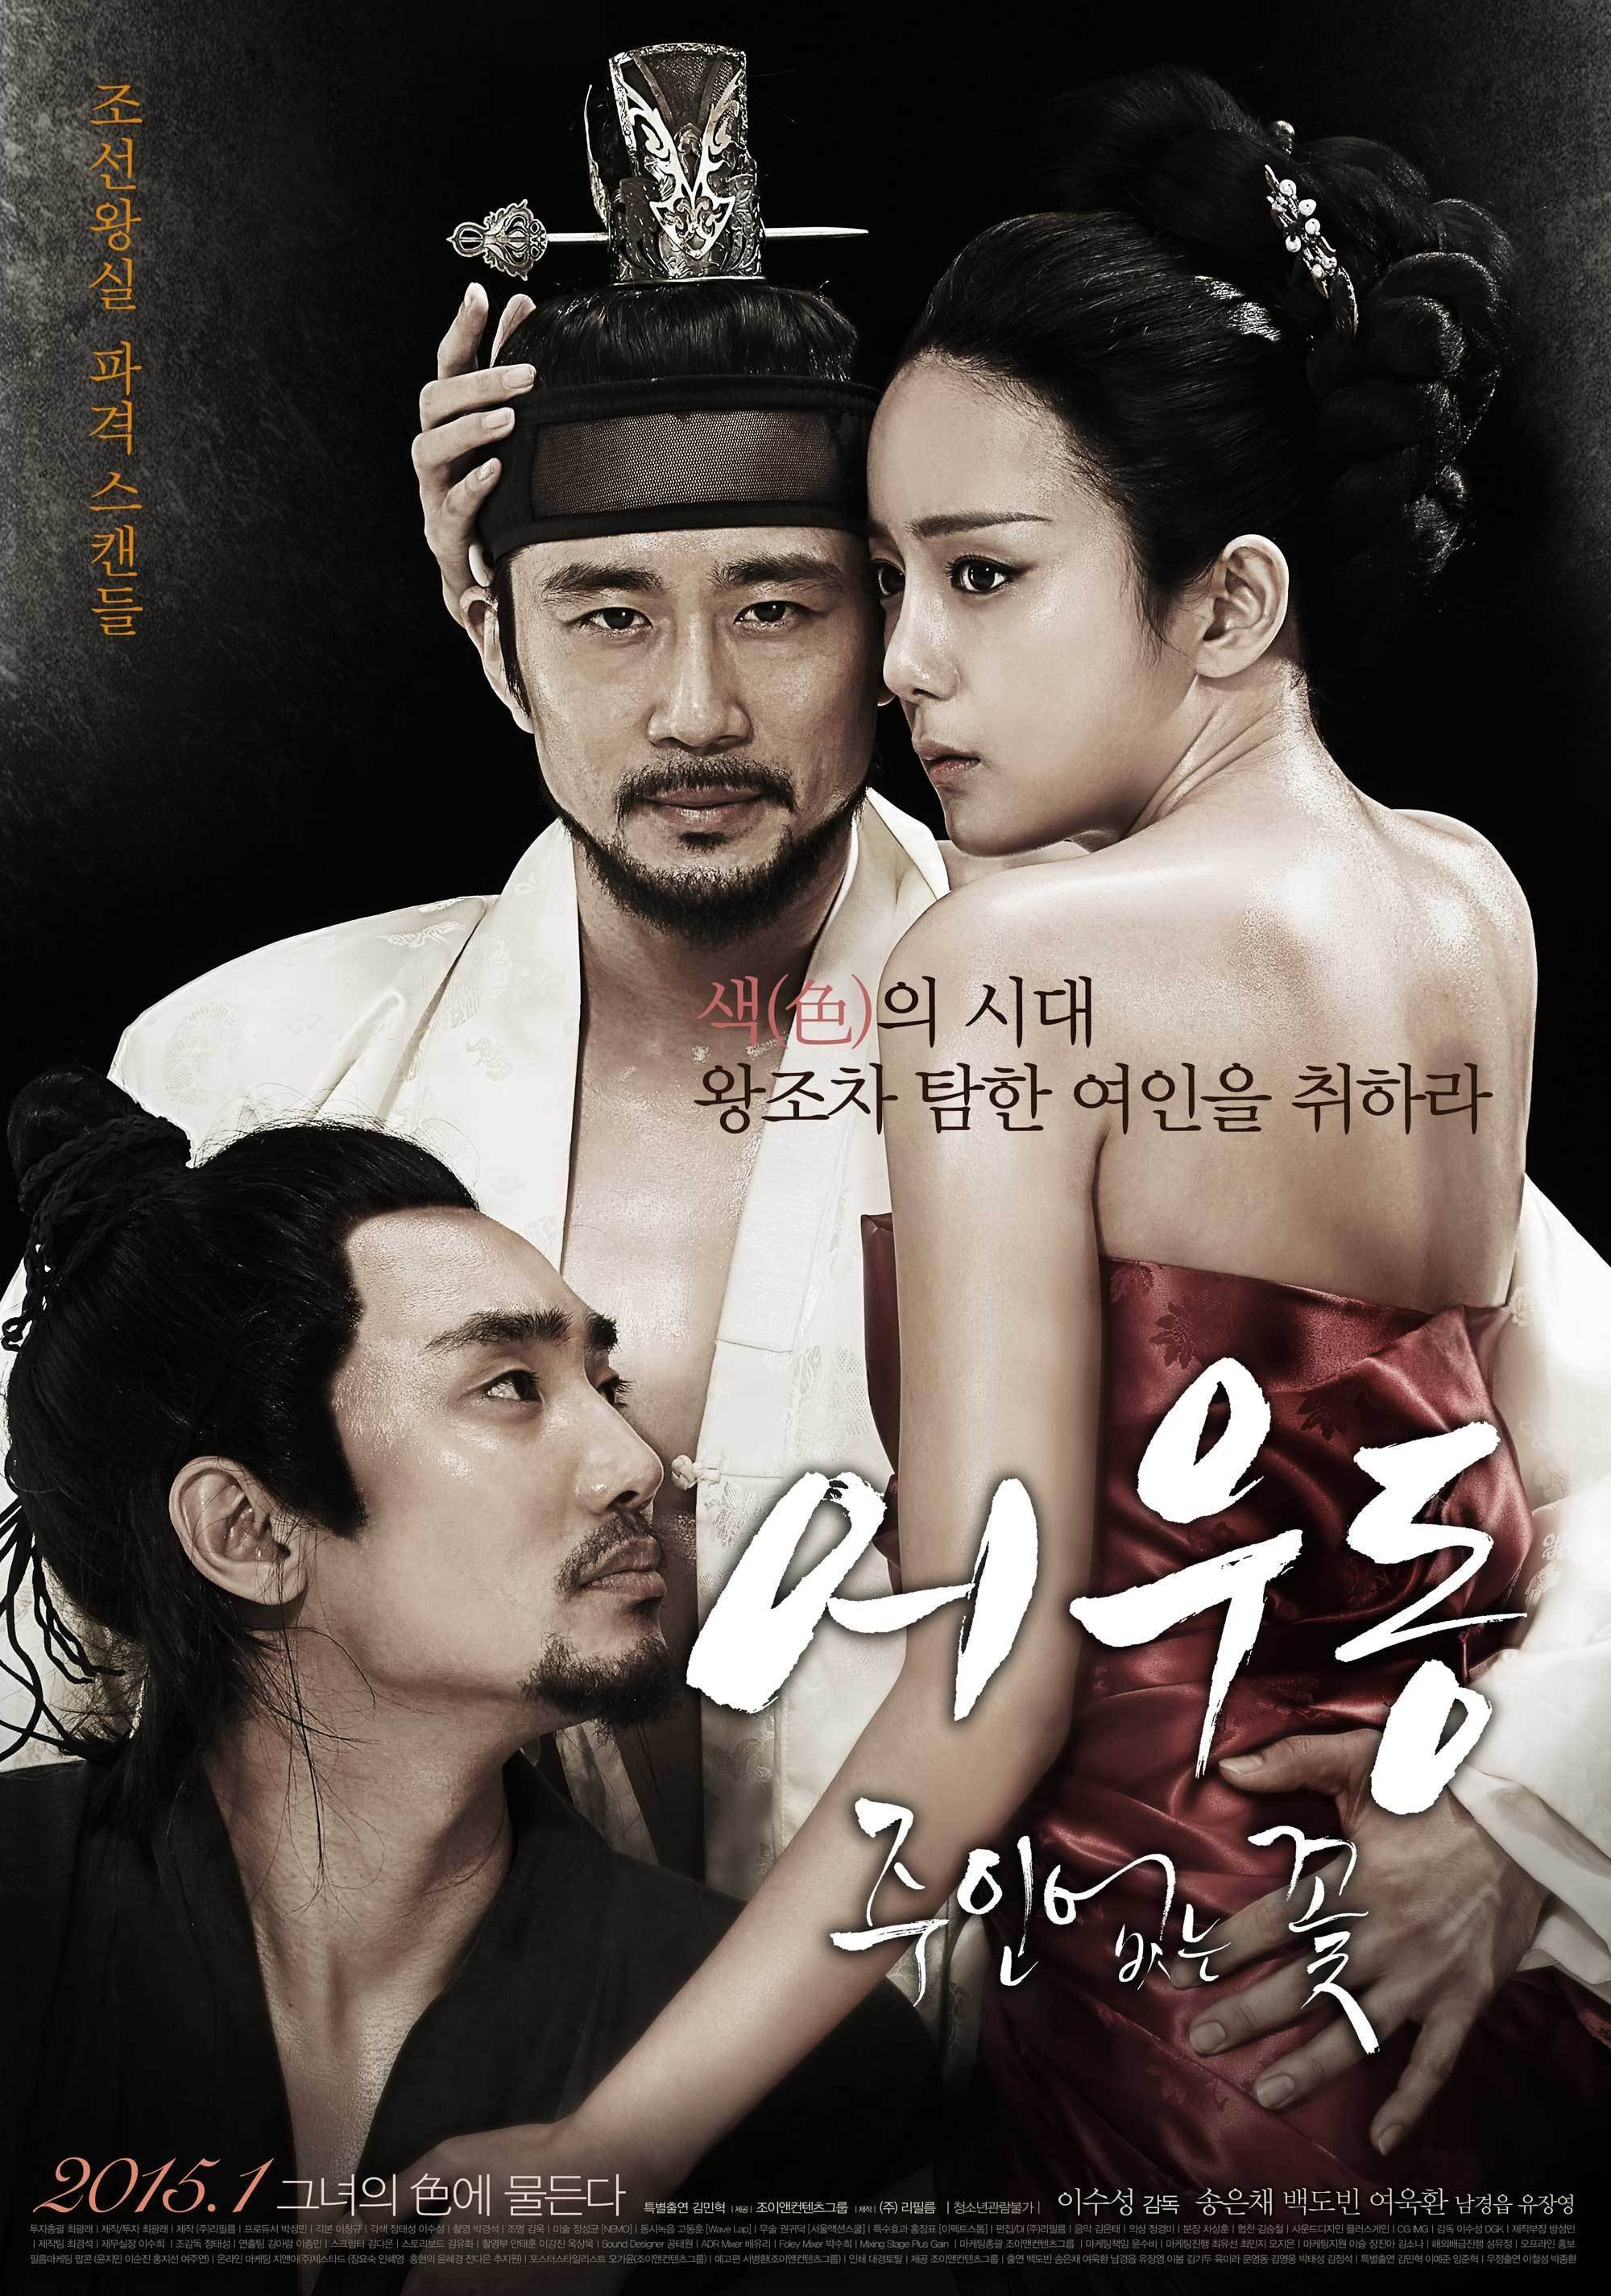 Korean movies opening today 2015/01/29 in Korea ...